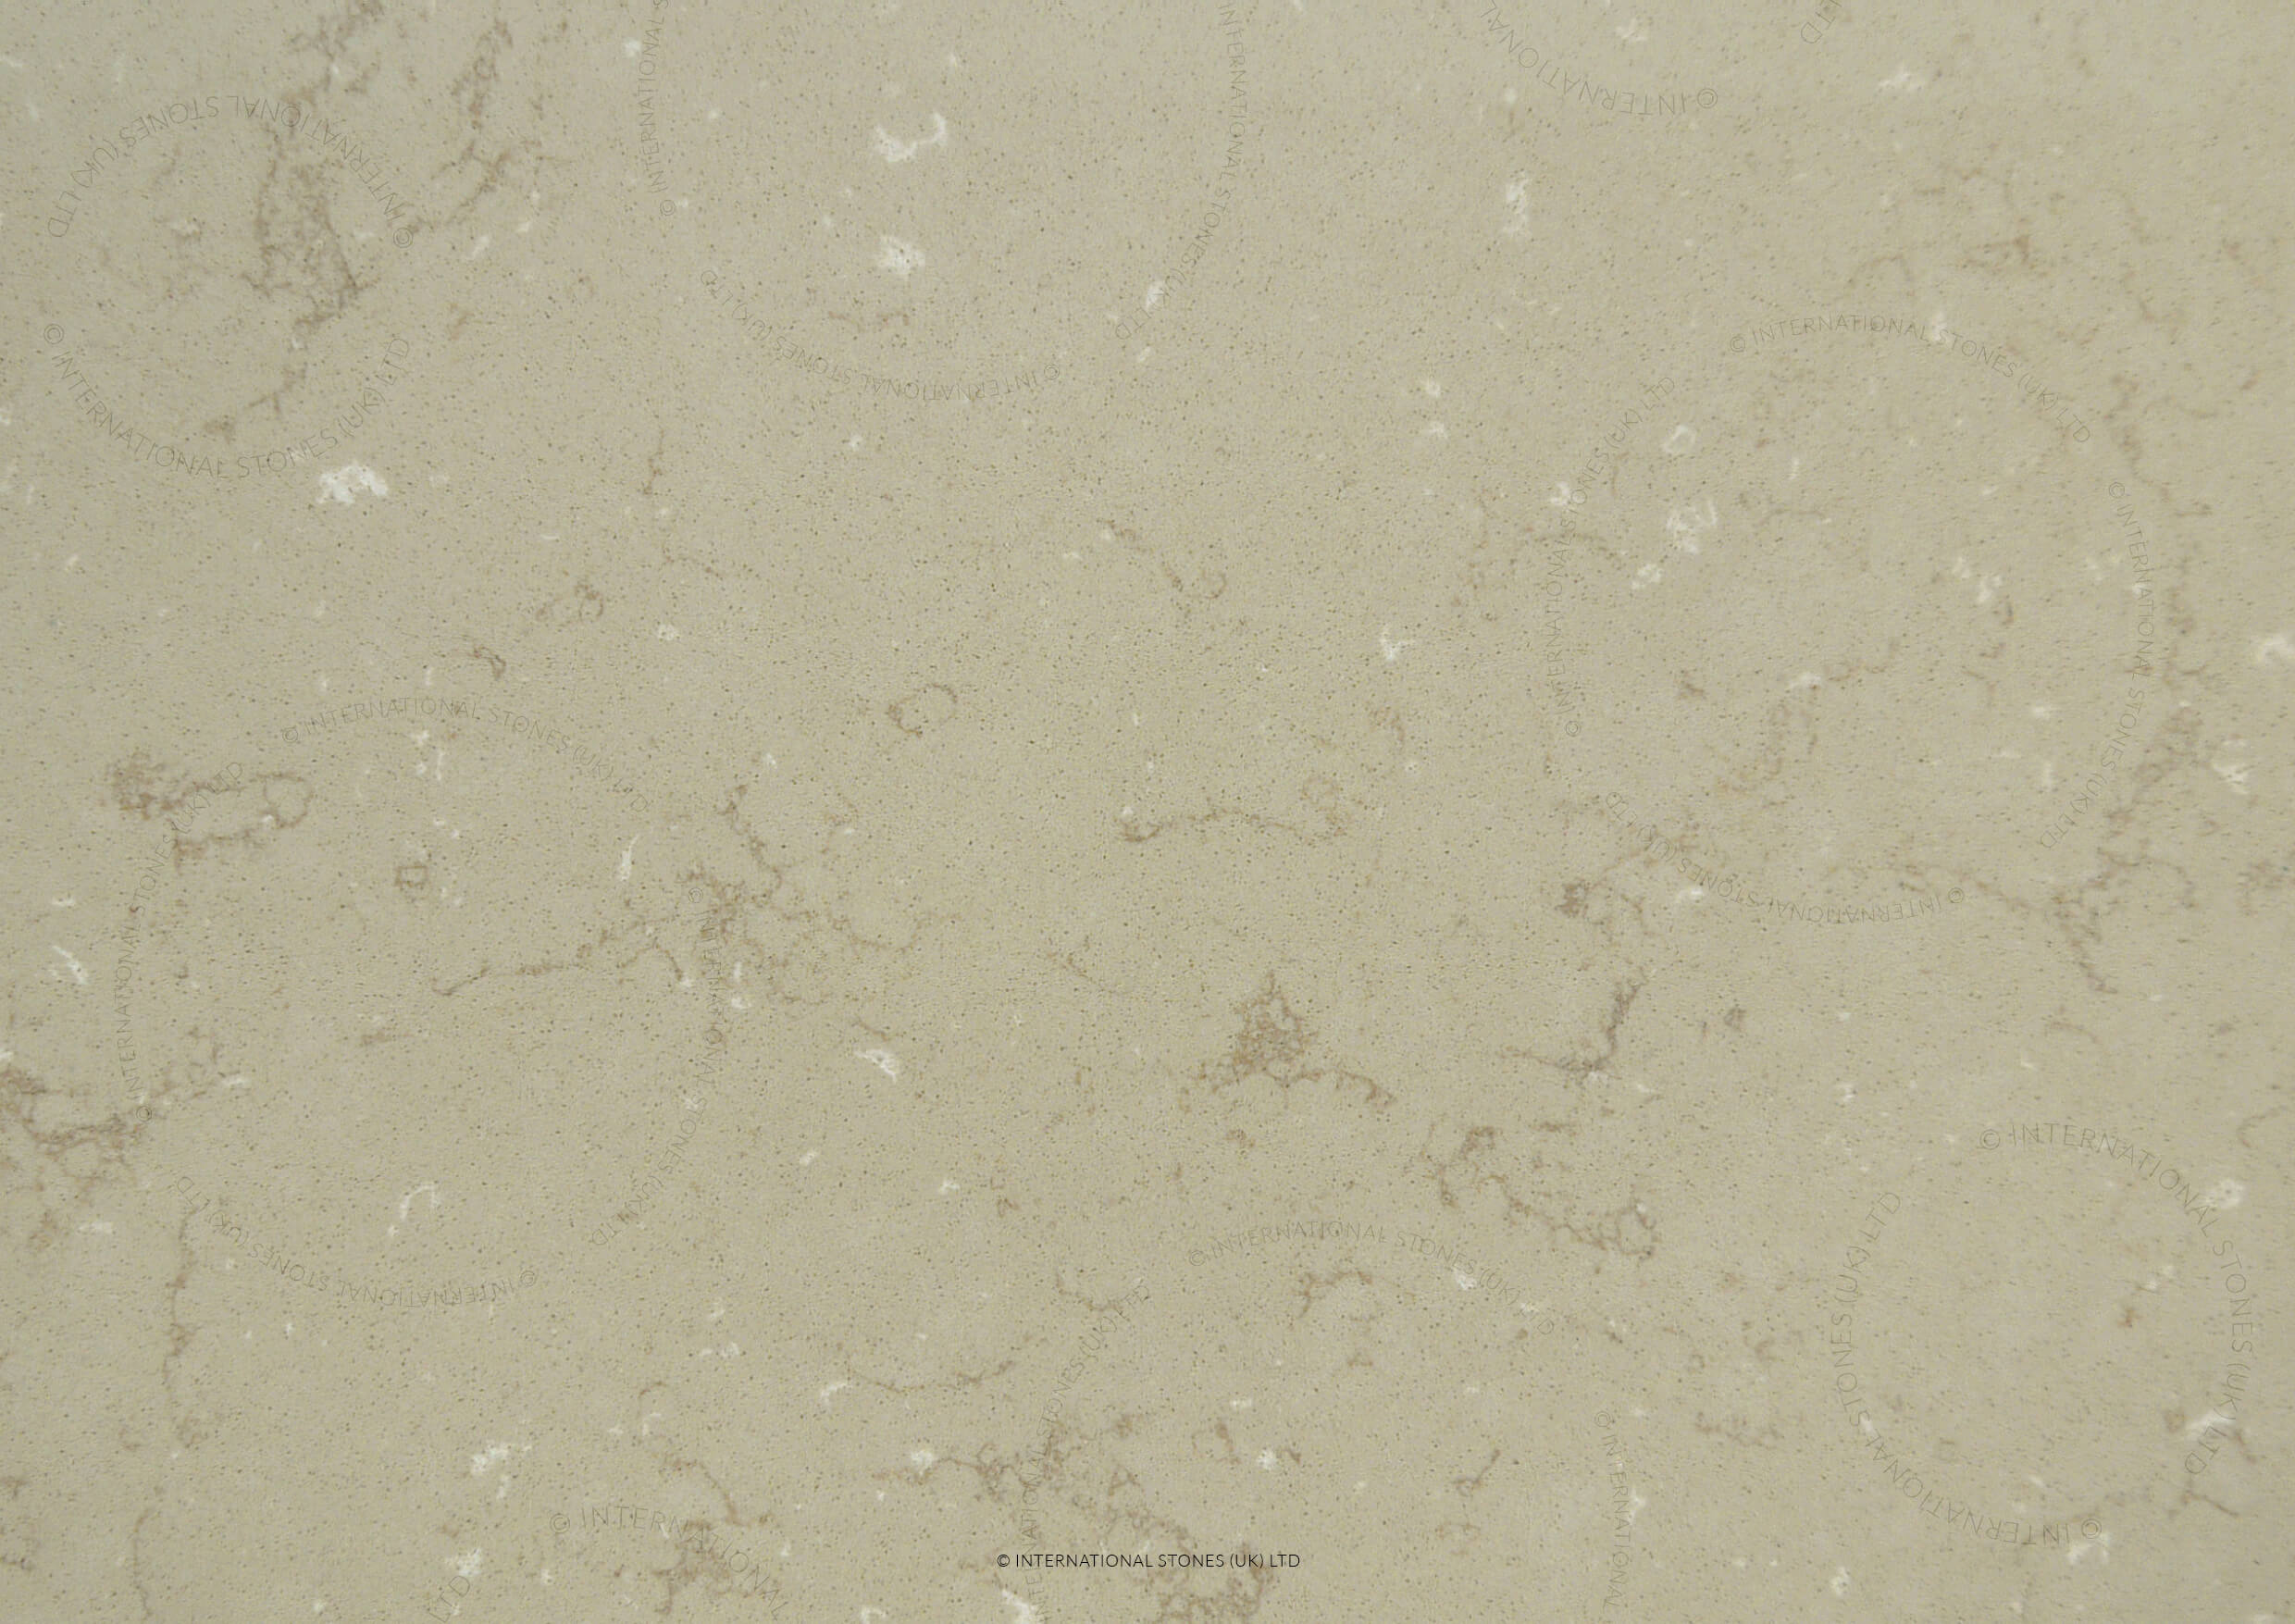 International Stone IQ Limestone - penrith - Burton-in-Kendal